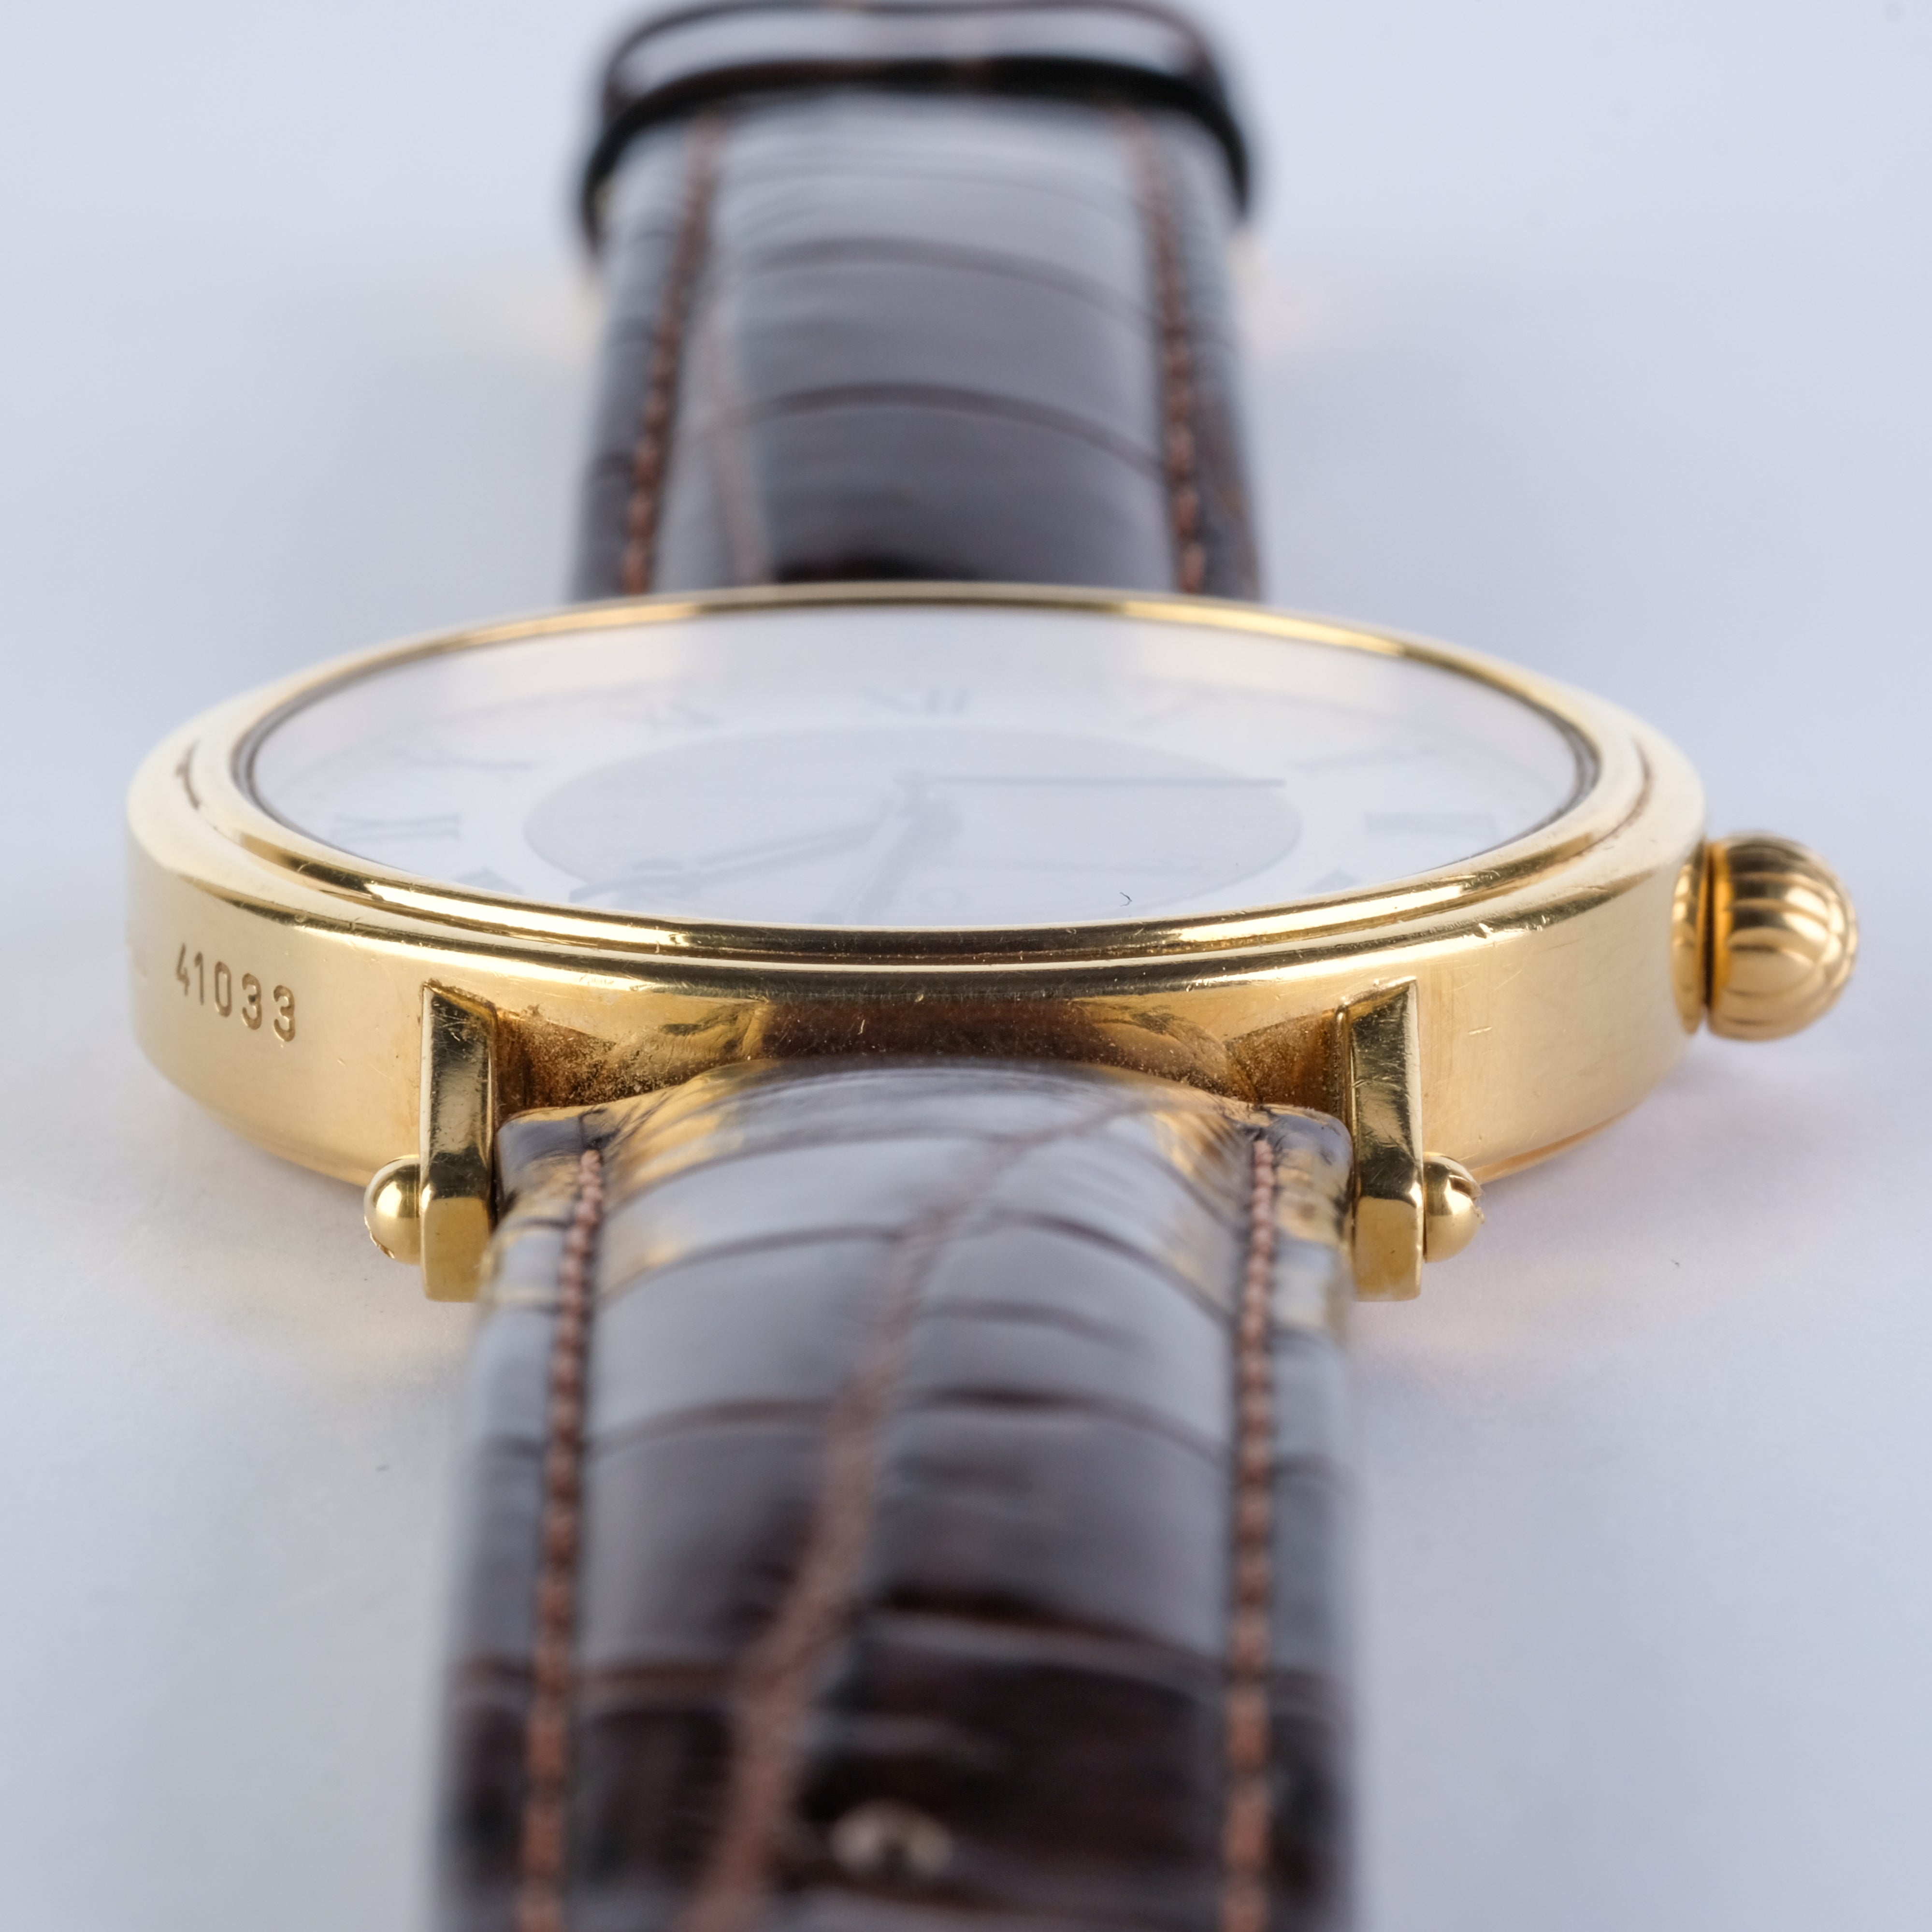 Holland & Holland 18k Chronometer, Case 41033 – C.W. Watch Shop